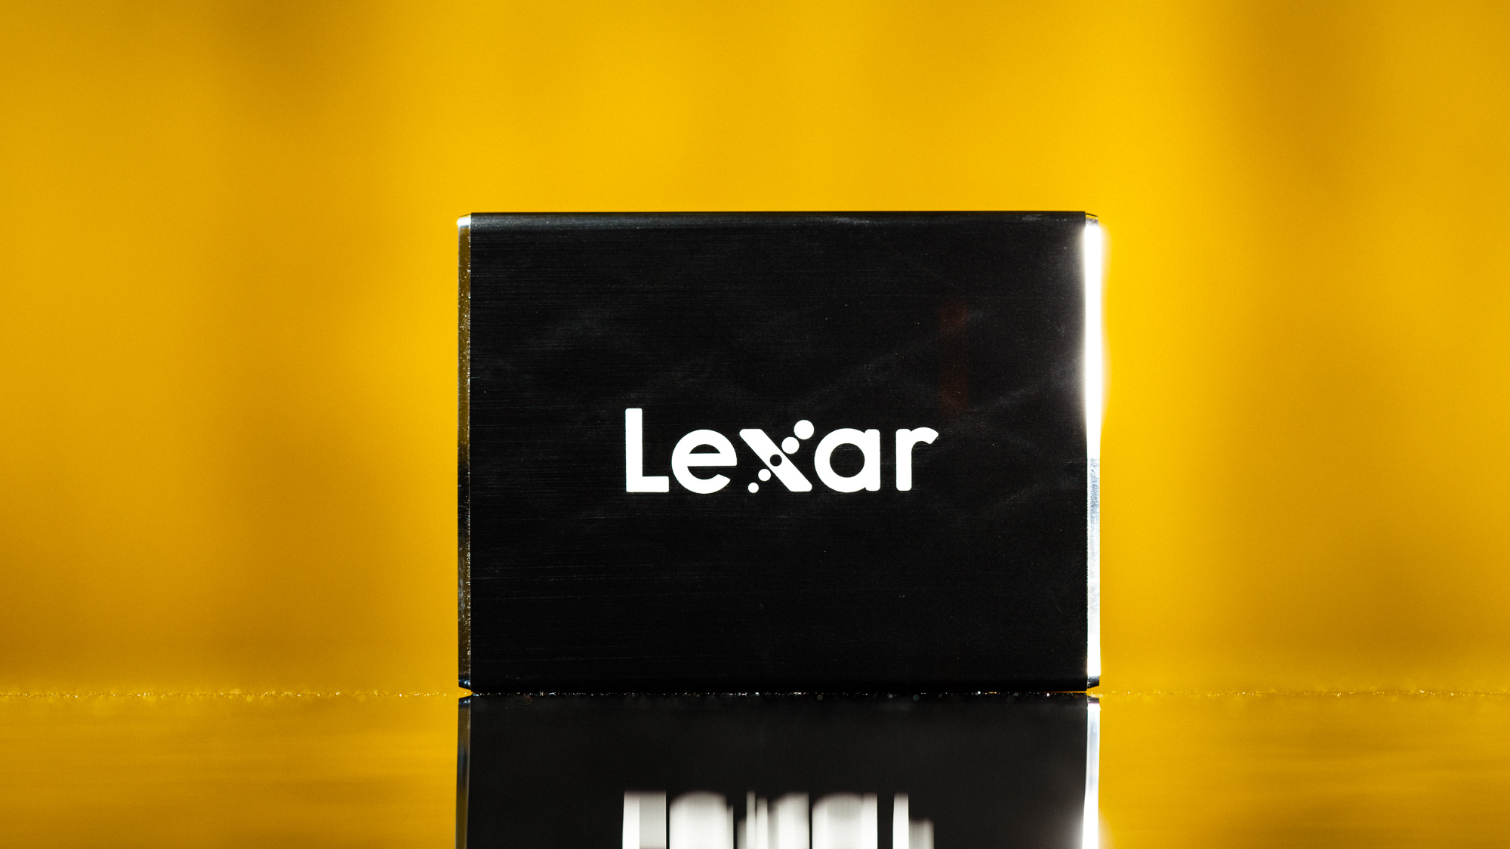 LSL100P-500RBNA Lexar Professional SL100 Pro Portable Solid-State Drive 500GB